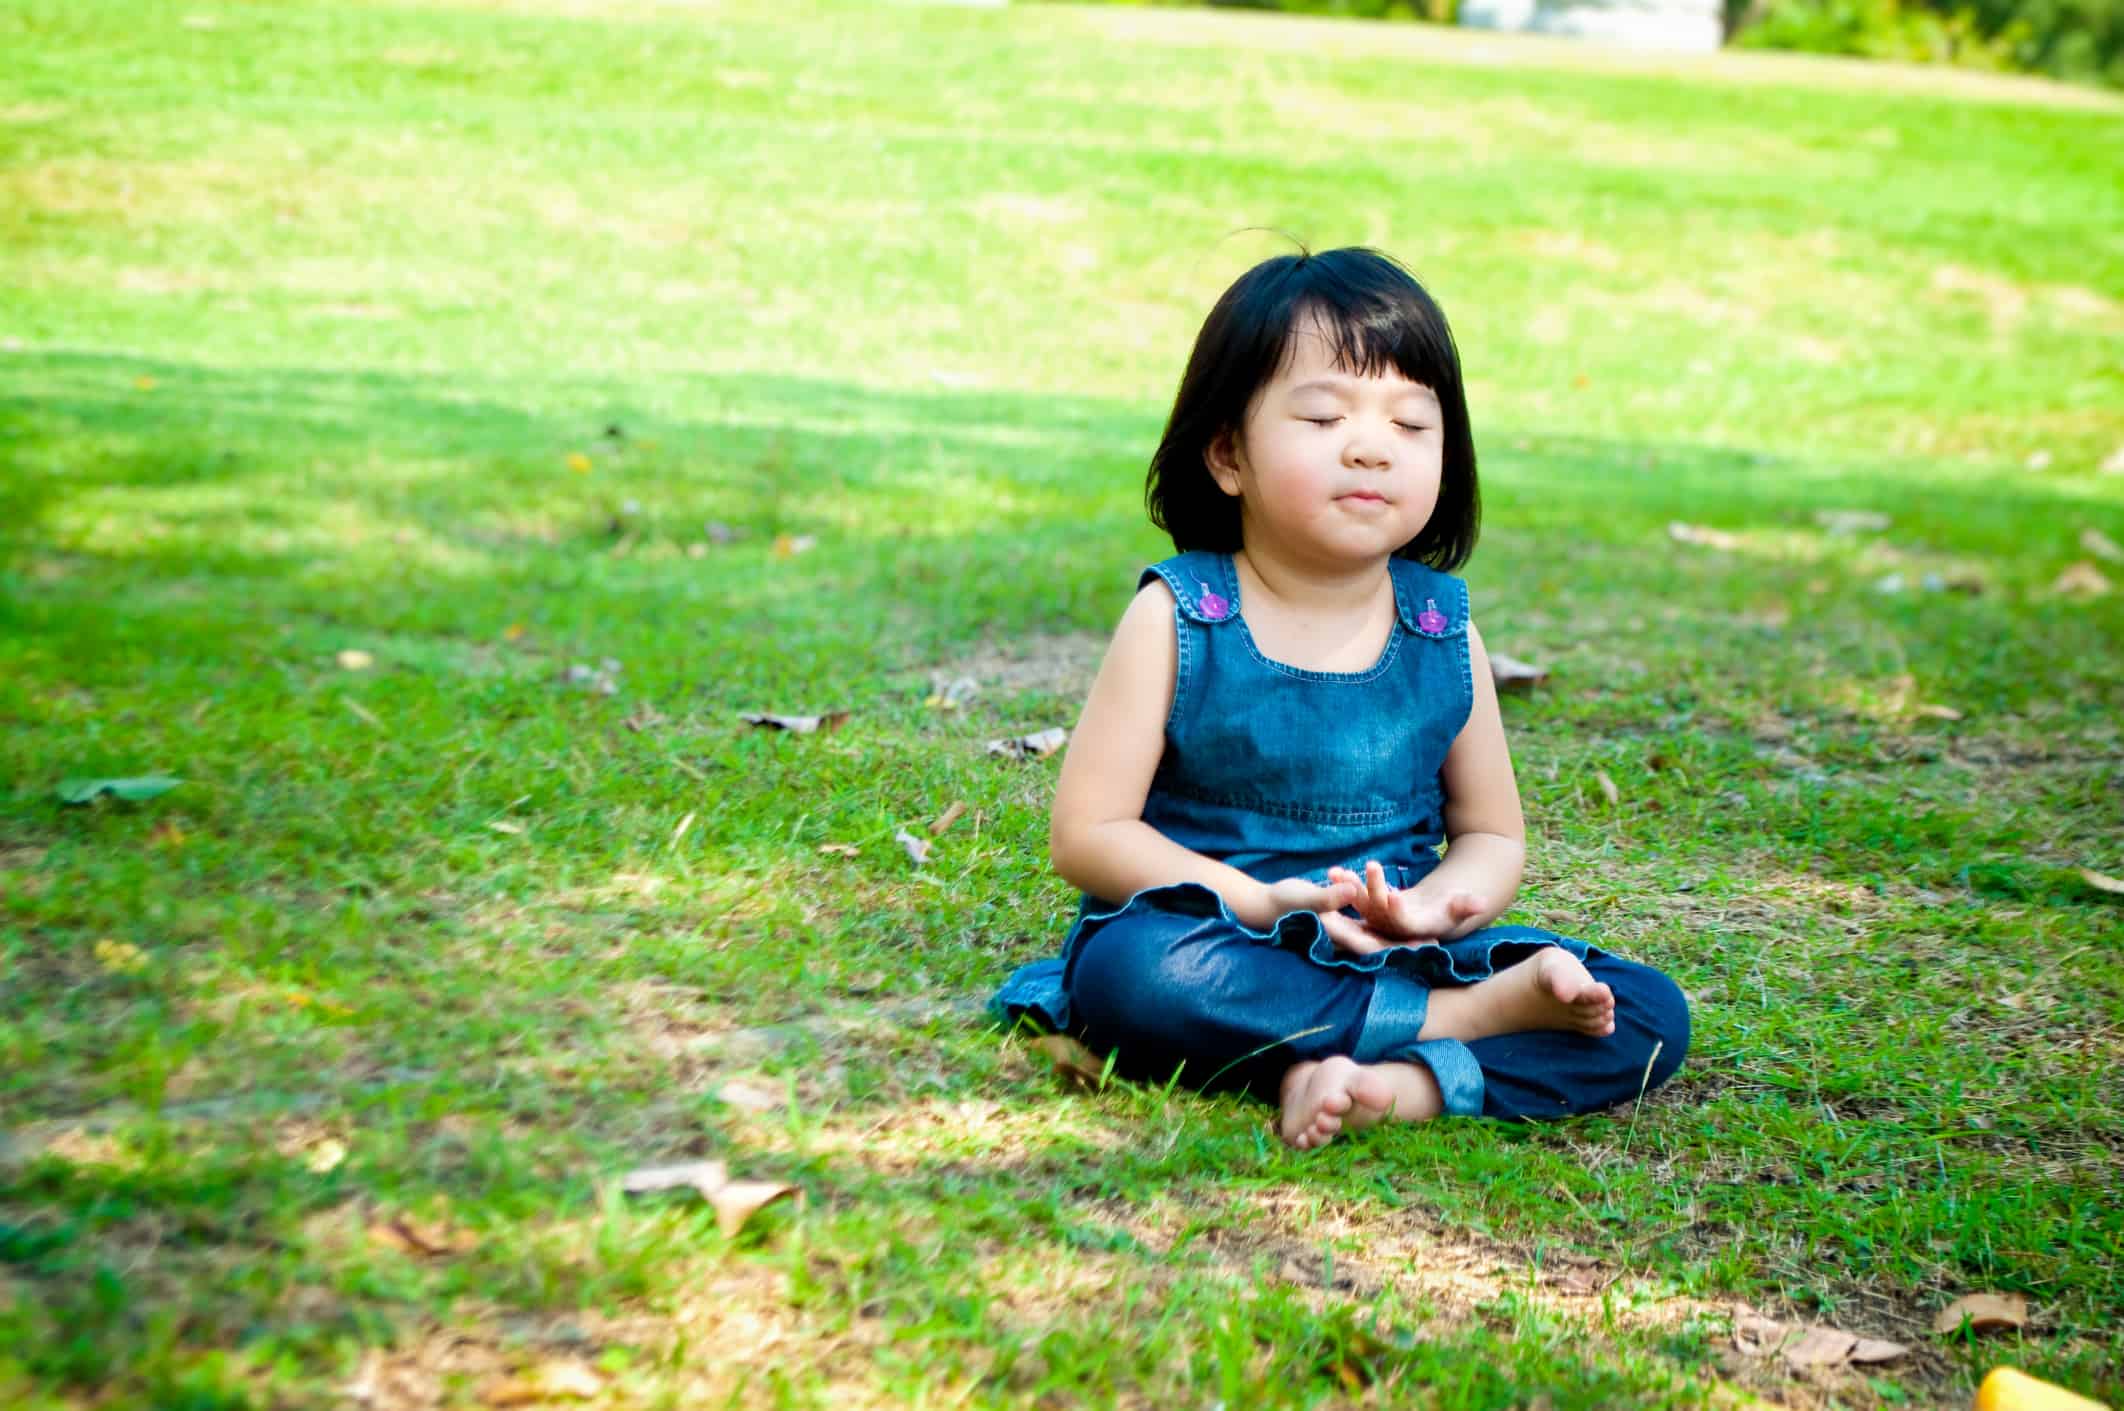 teaching children to practice mindfulness